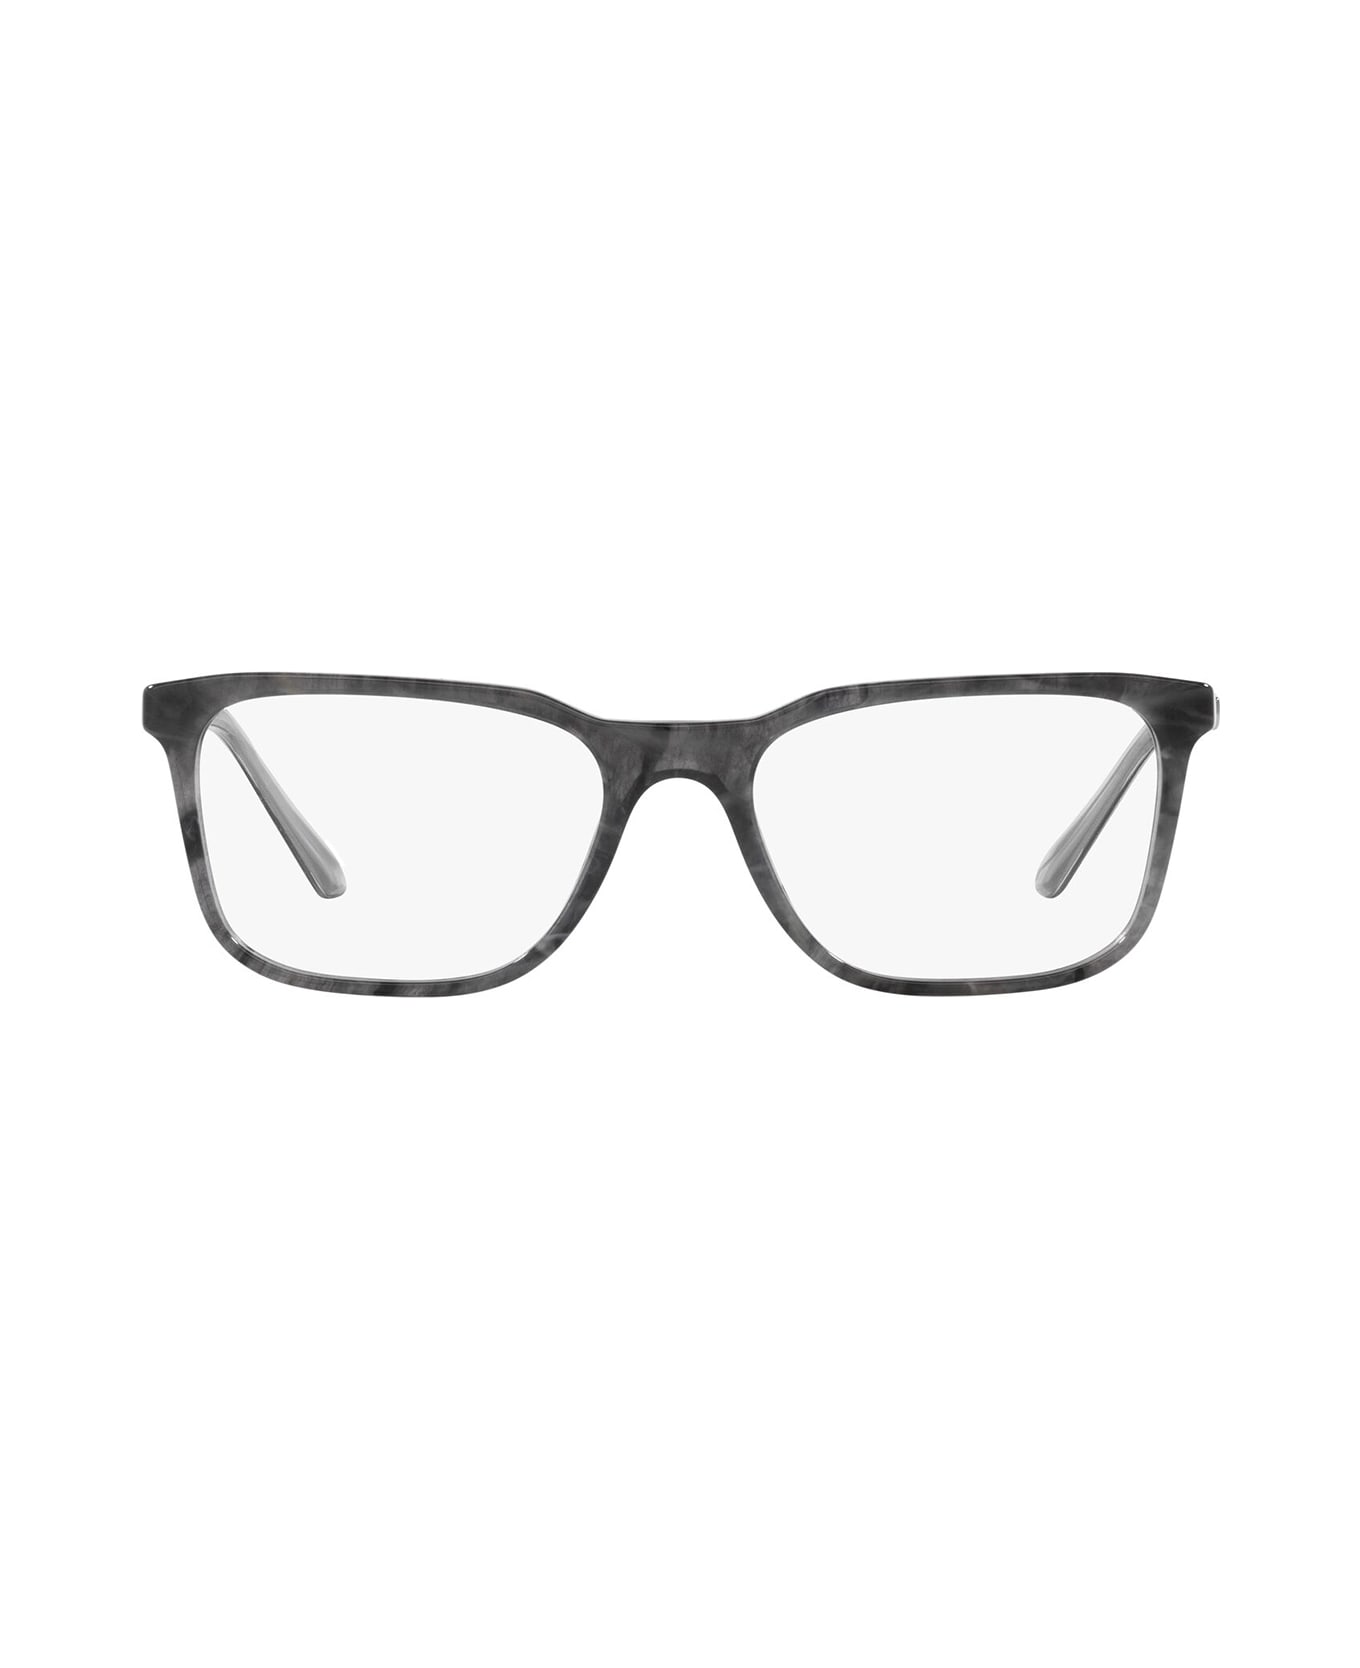 Prada Eyewear Pr 05zv Graphite Stone Glasses - Graphite Stone アイウェア